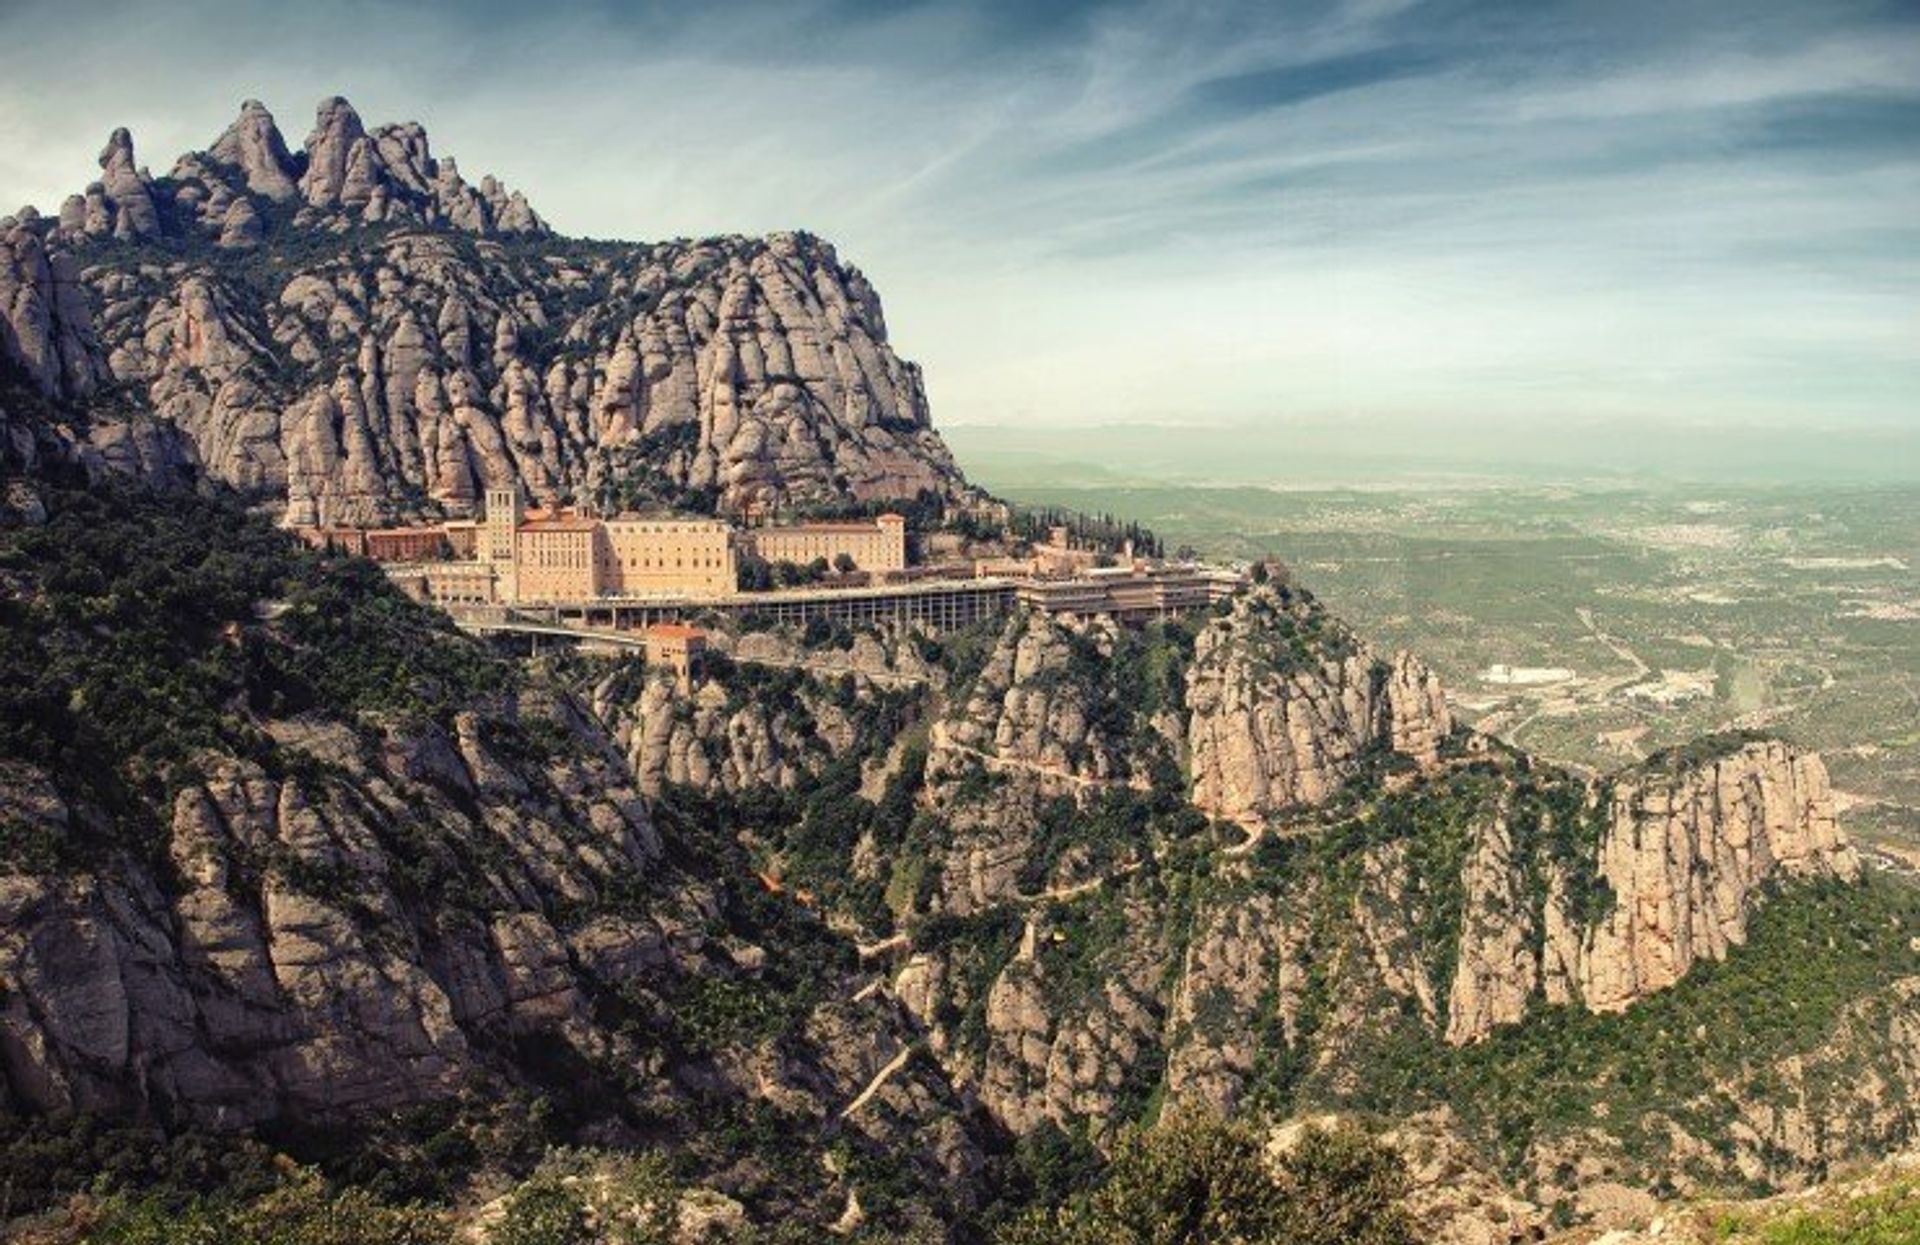 Santa Maria de Monseratt Monastery provides majestic views from its 1,200m-high mountain